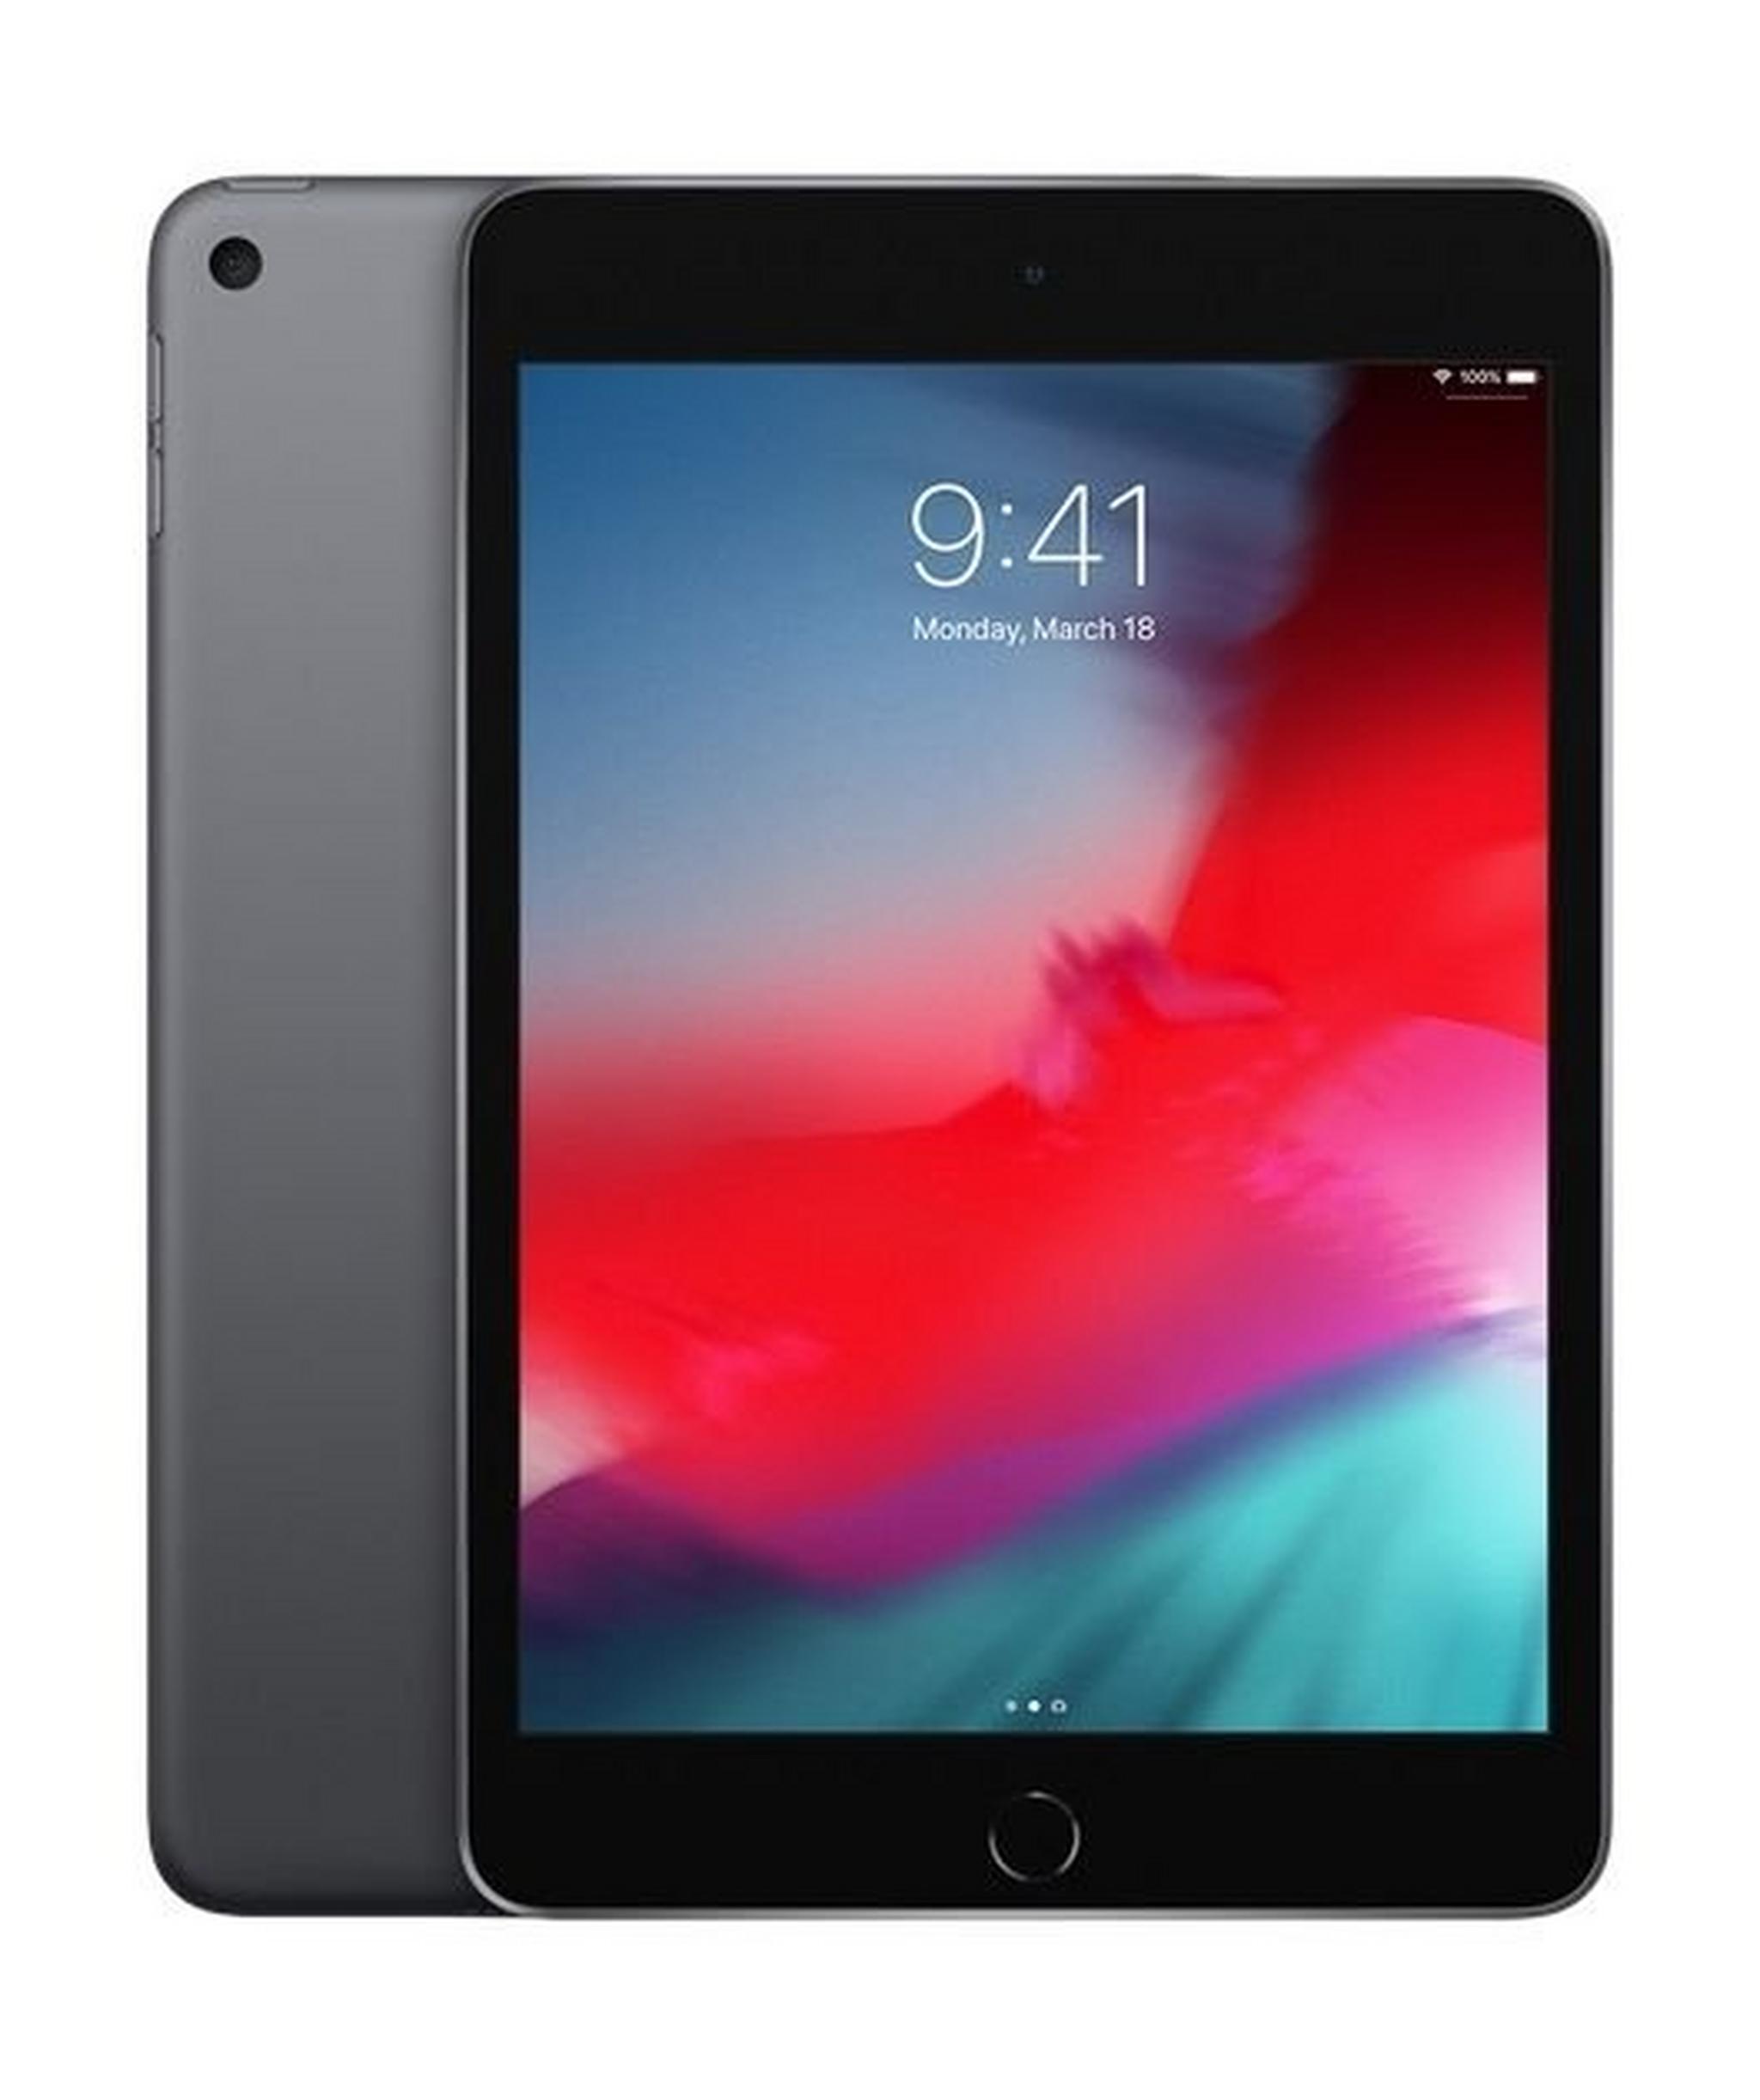 Apple iPad Mini 5 7.9-inch 64GB Wi-Fi Only Tablet - Space Grey